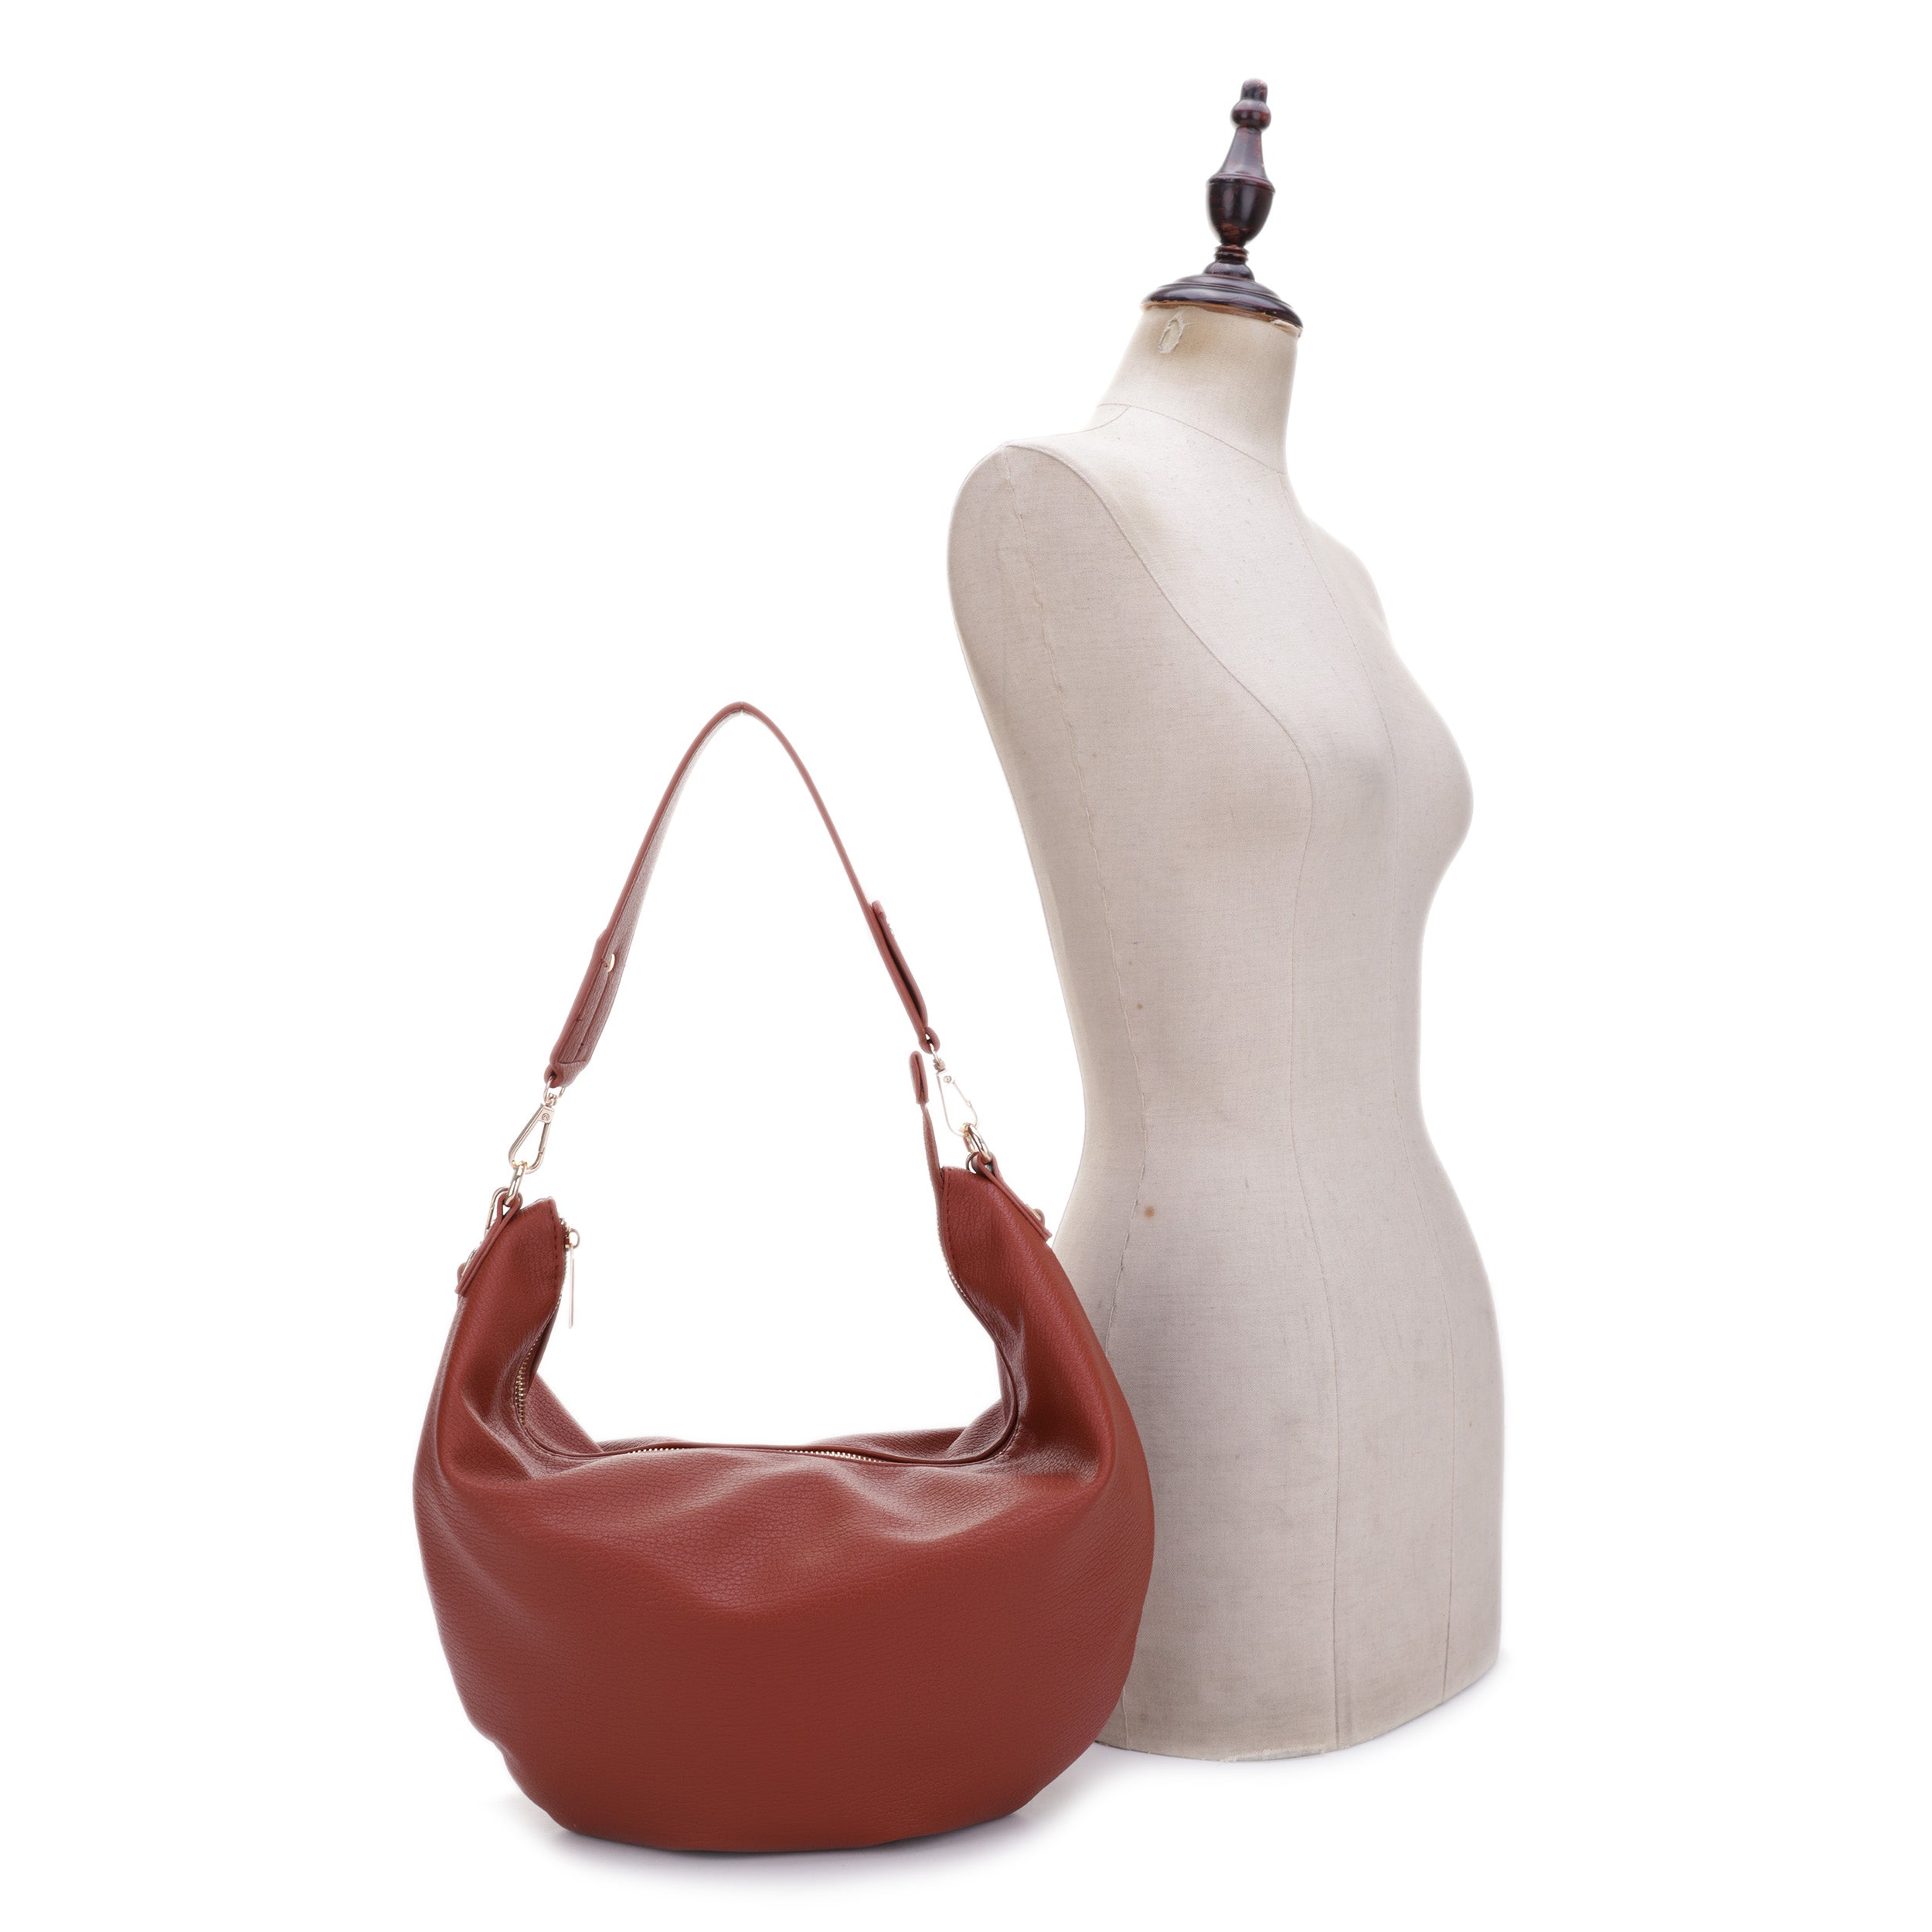 Mali + Lili Handbags Designed to Make a Difference